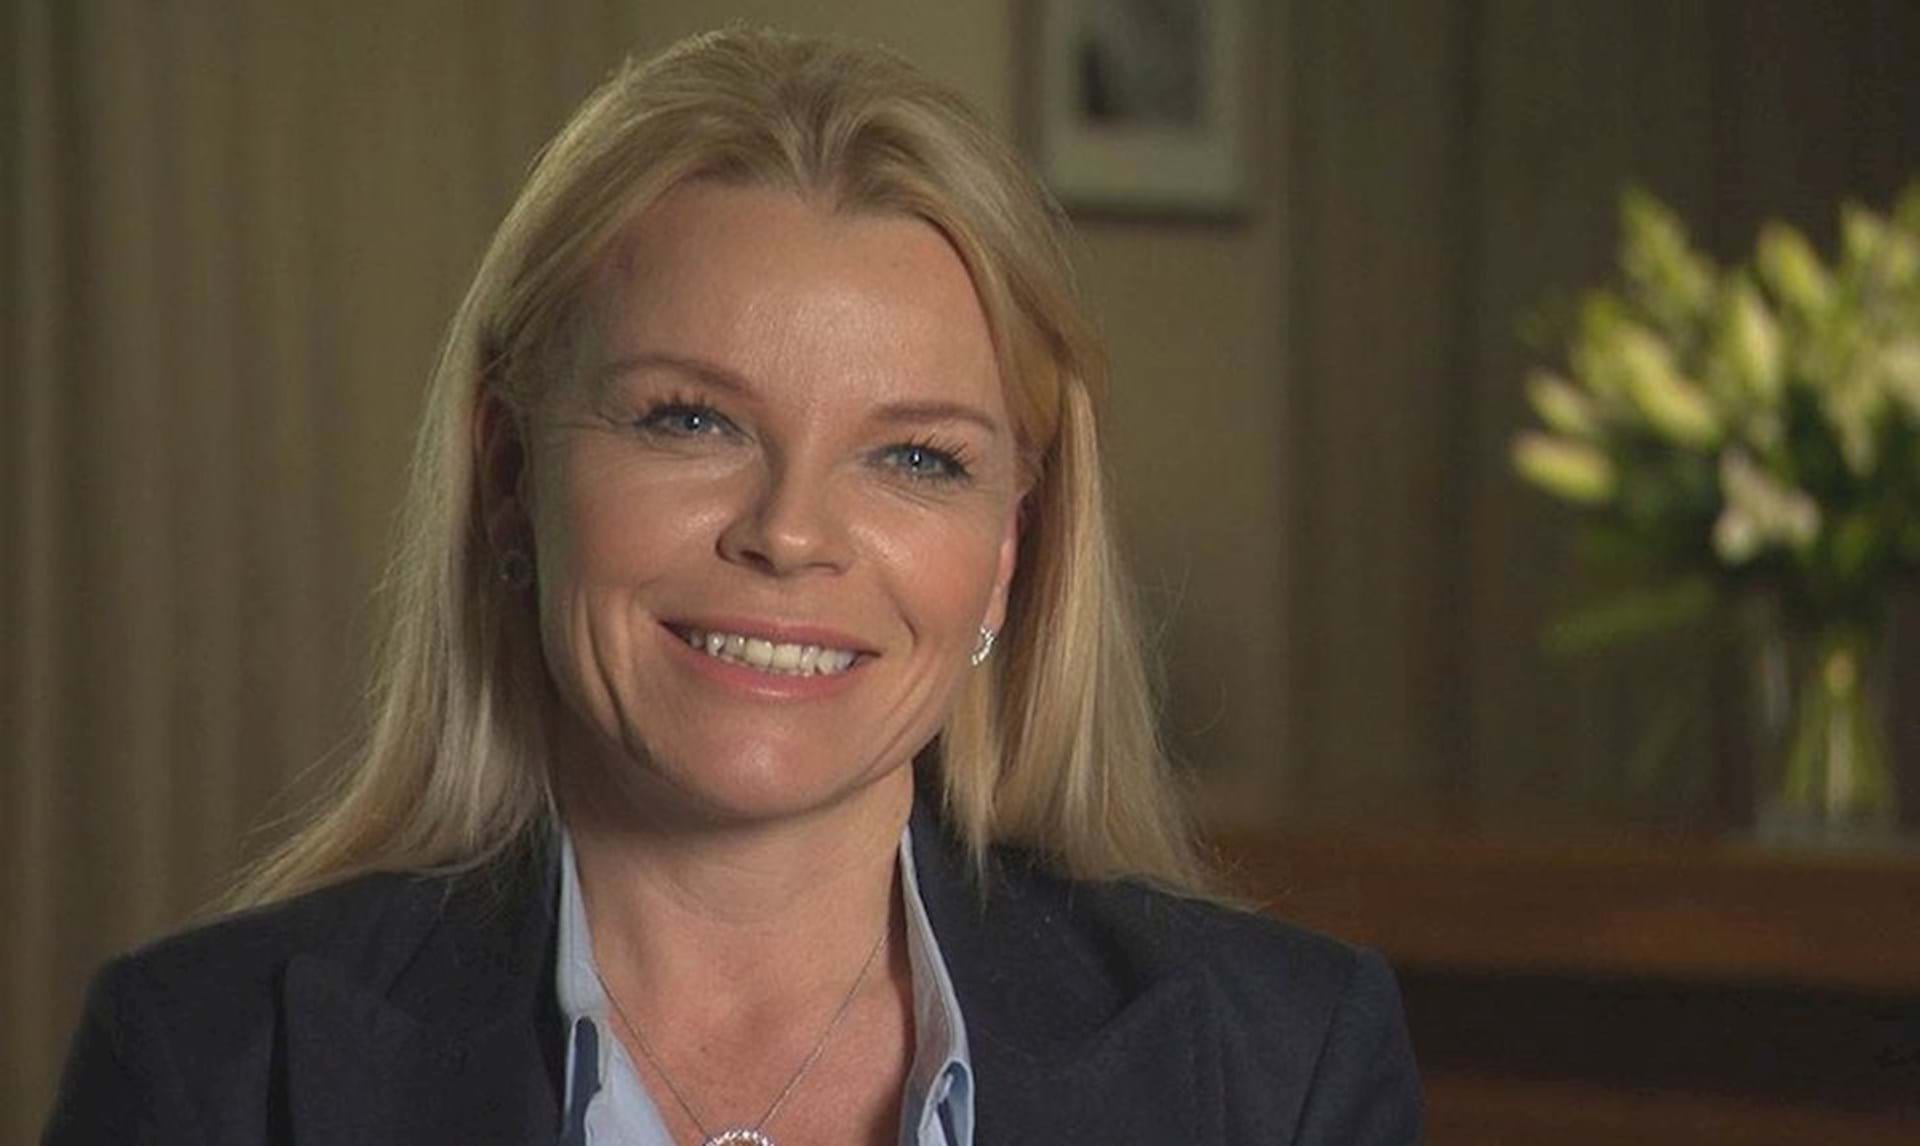 Katerina Pitzner for millioner - ALT.dk